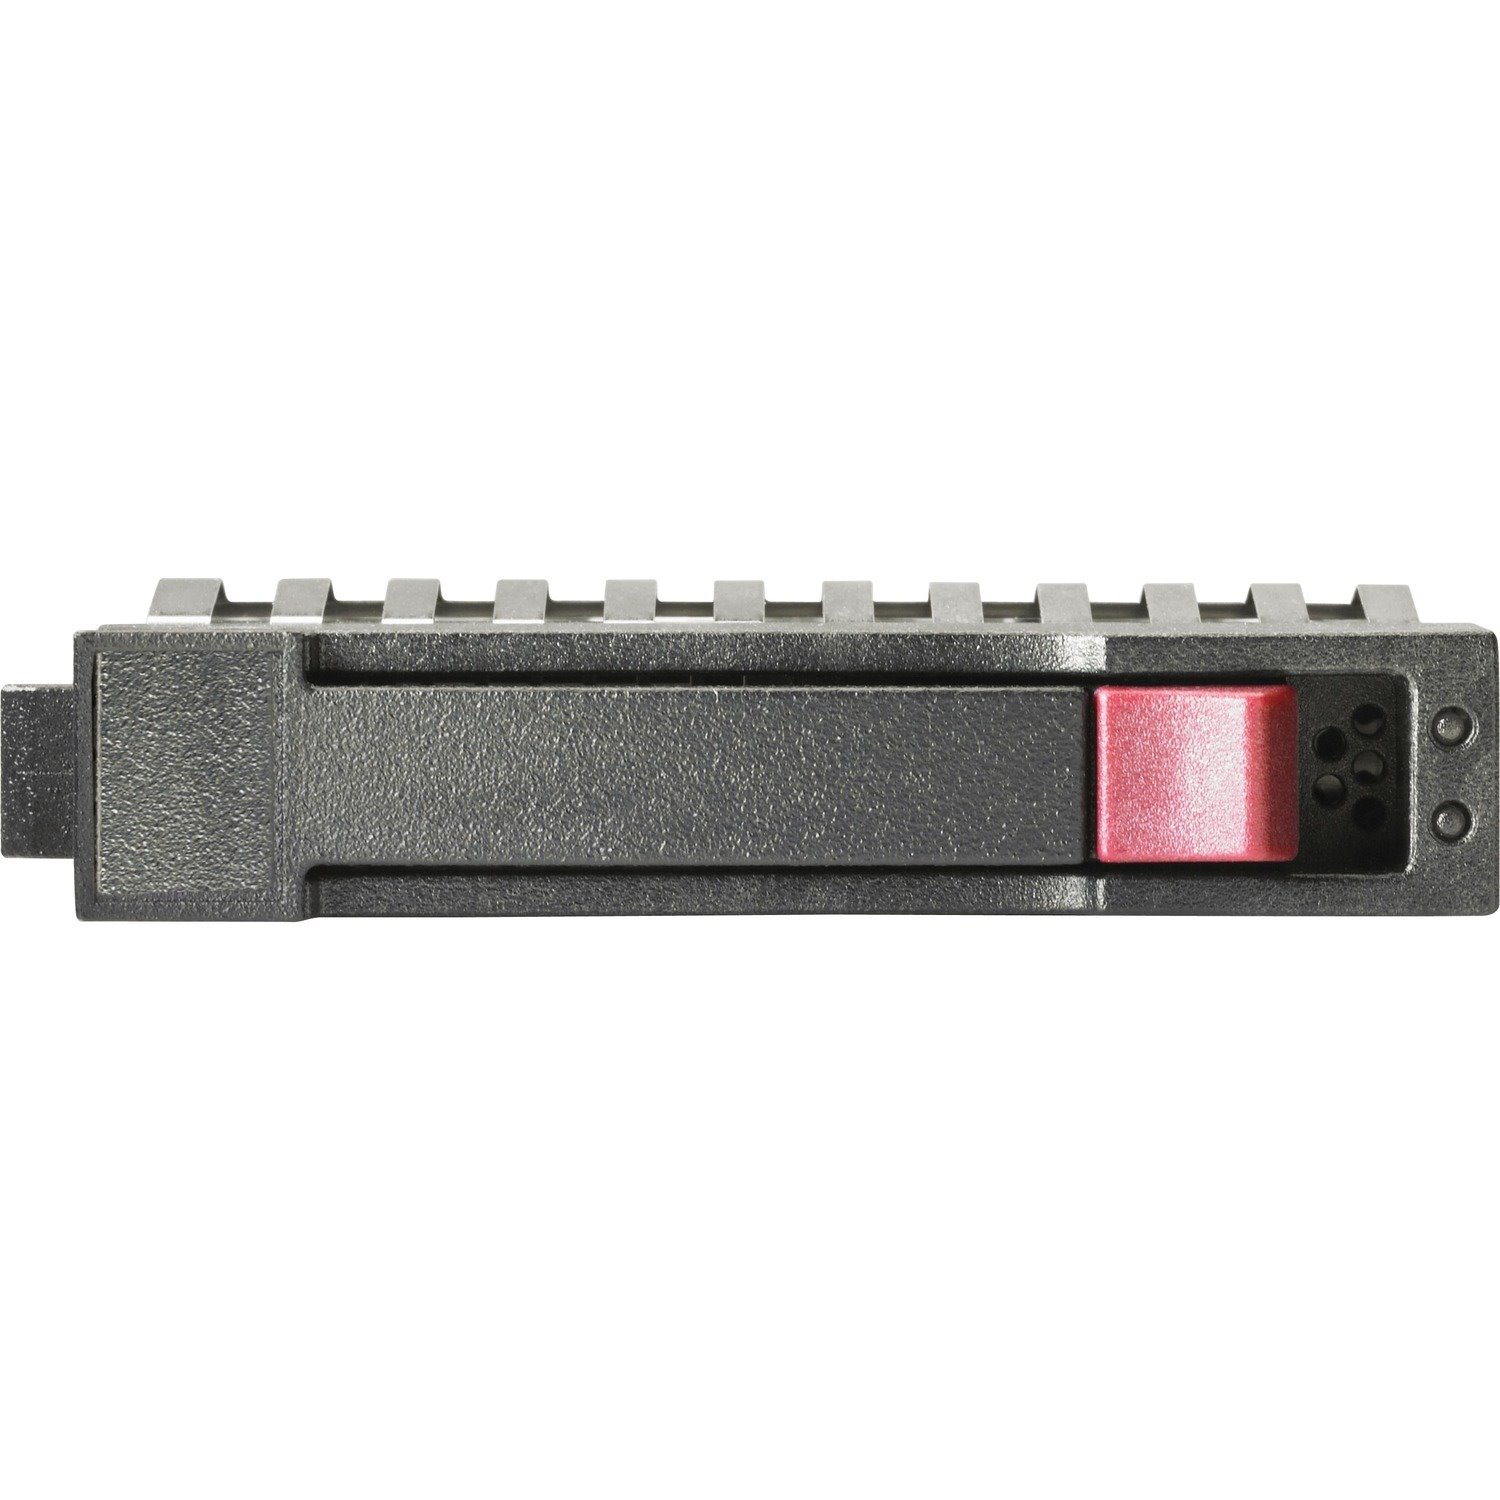 HPE 800 GB Solid State Drive - 2.5" Internal - SAS (12Gb/s SAS)